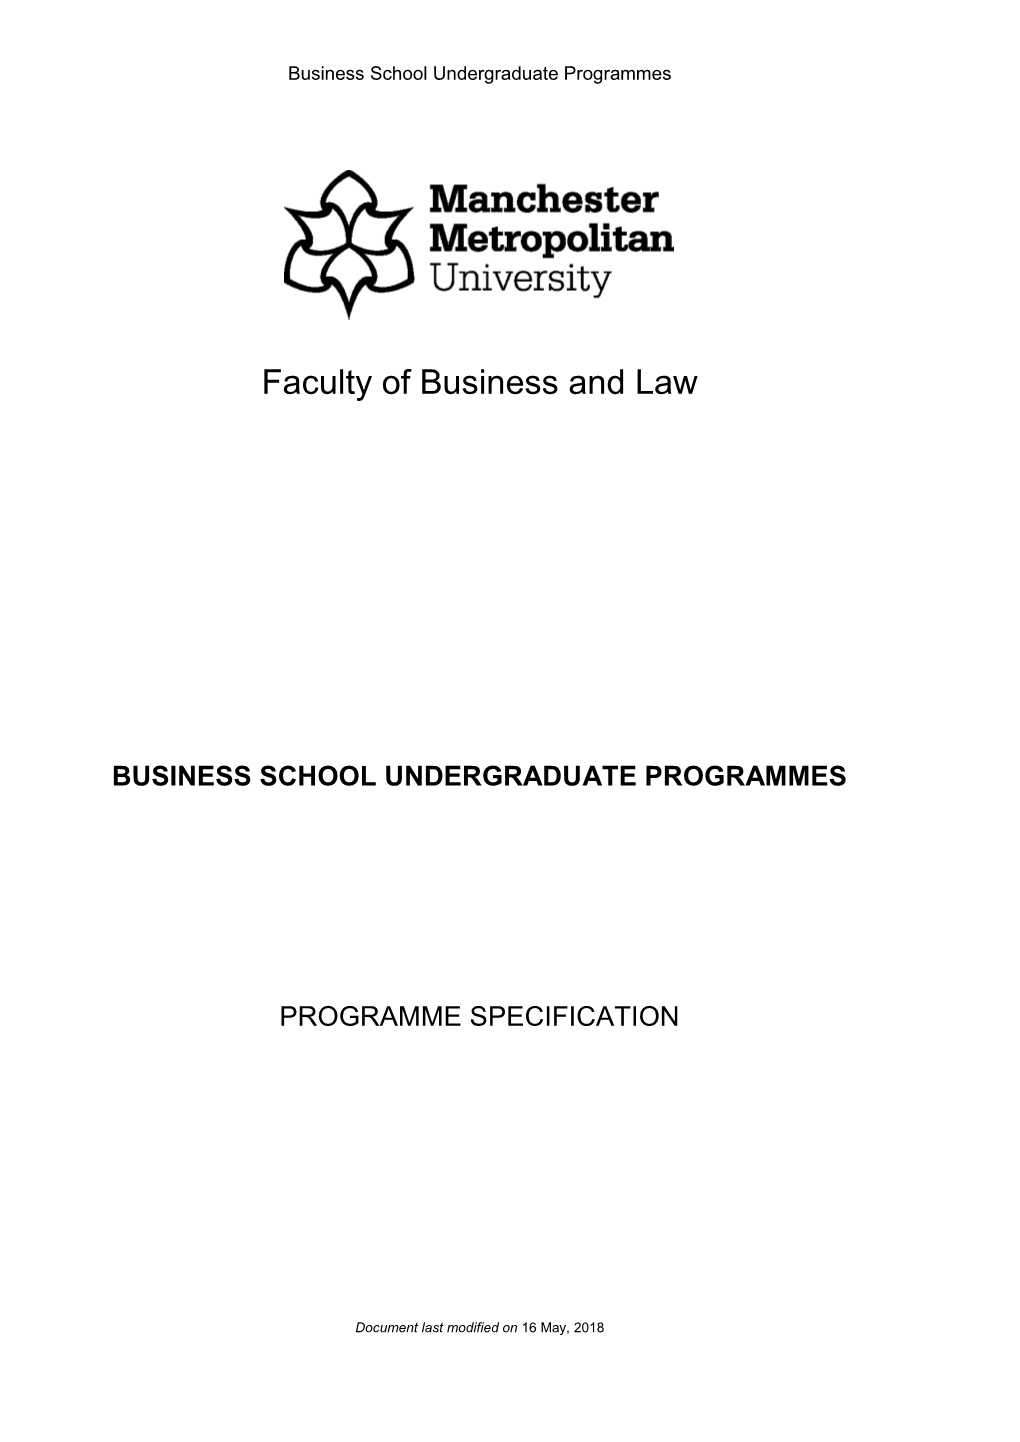 Business School Undergraduate Programmes Programme Specification